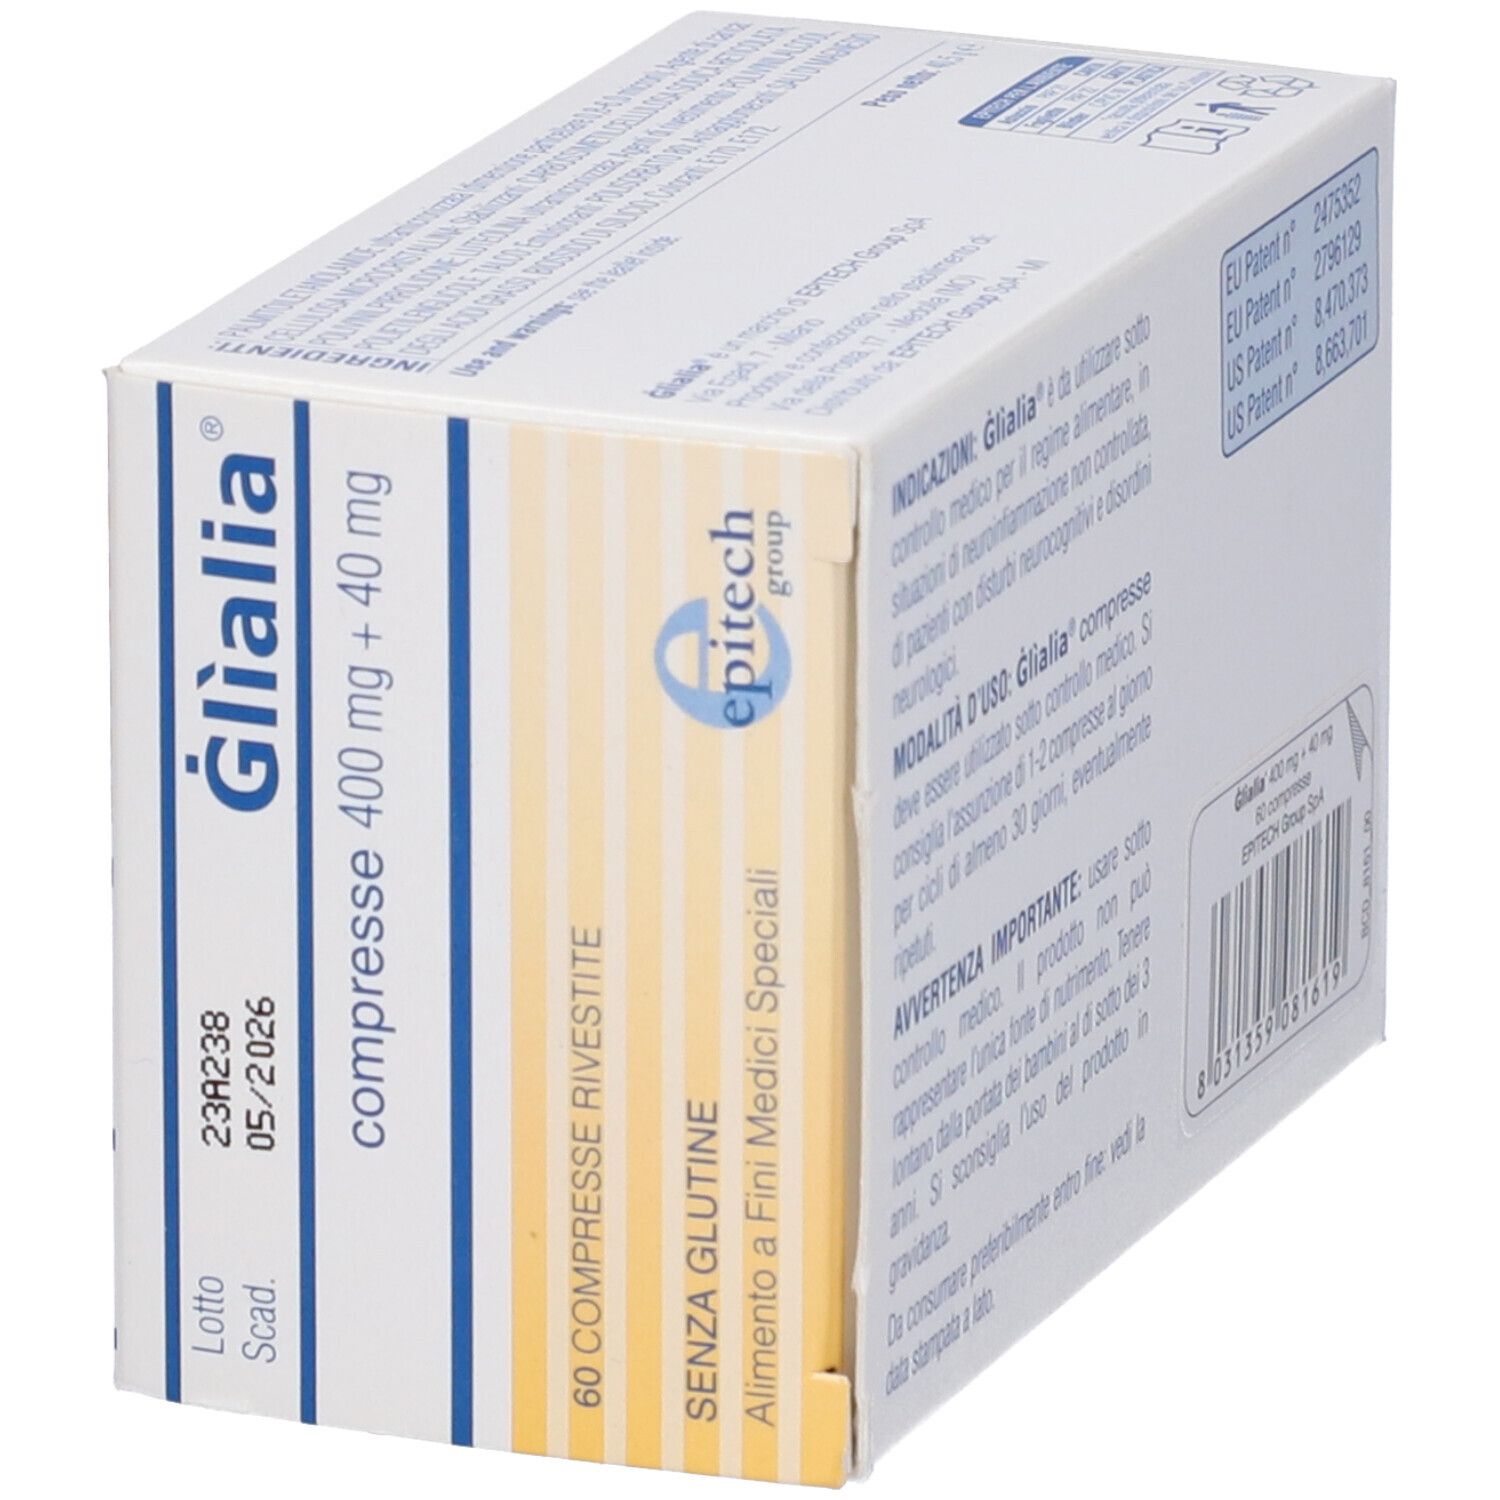 Glialia® Compresse 400 mg + 40 mg